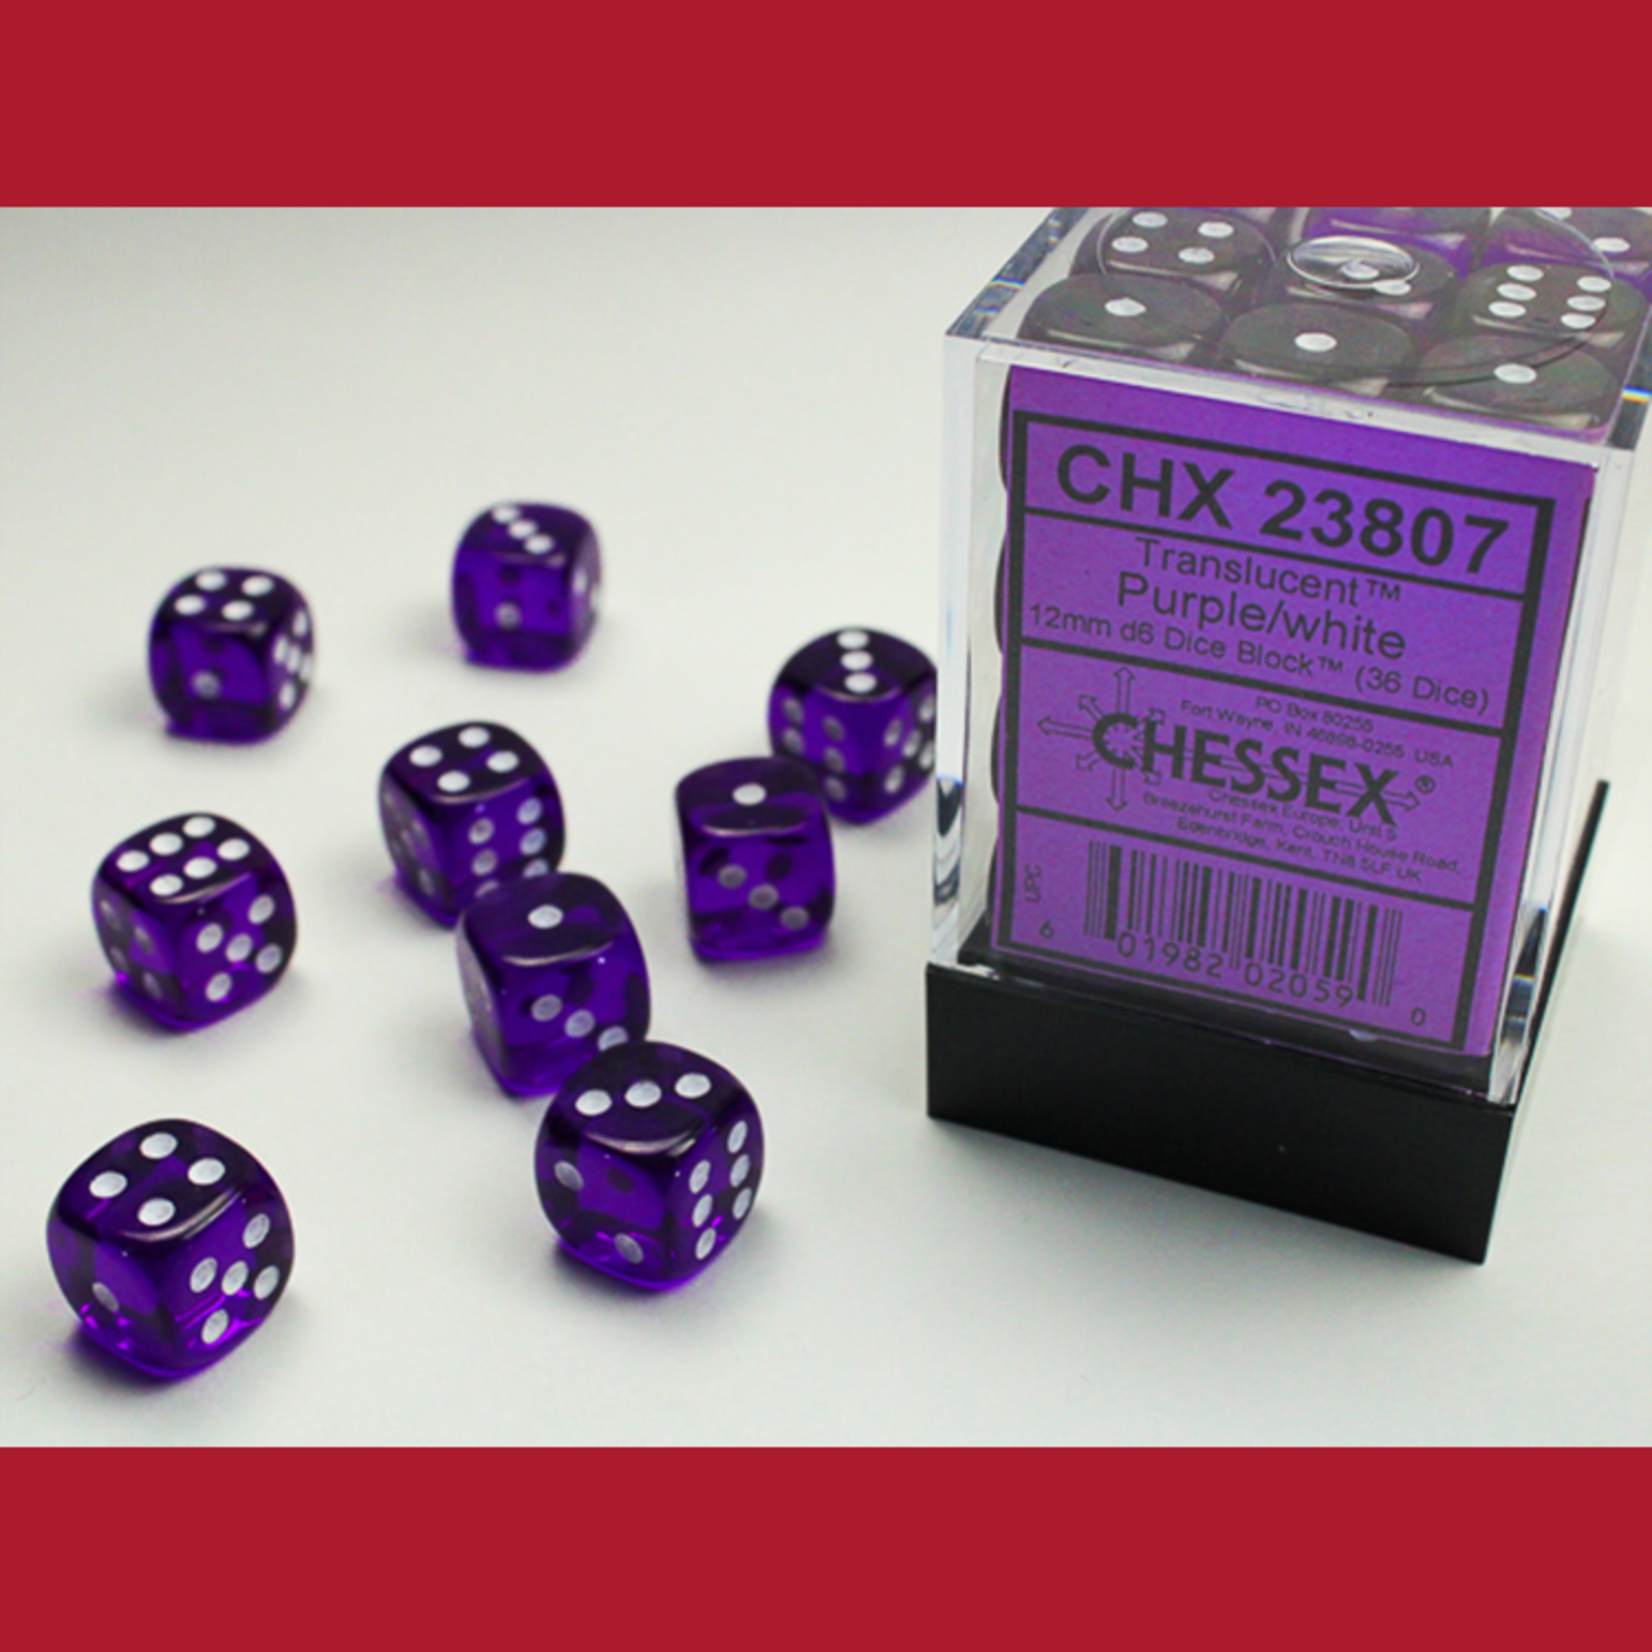 Chessex CHX 23807 Translucent Purple / White 12mm (36d6)